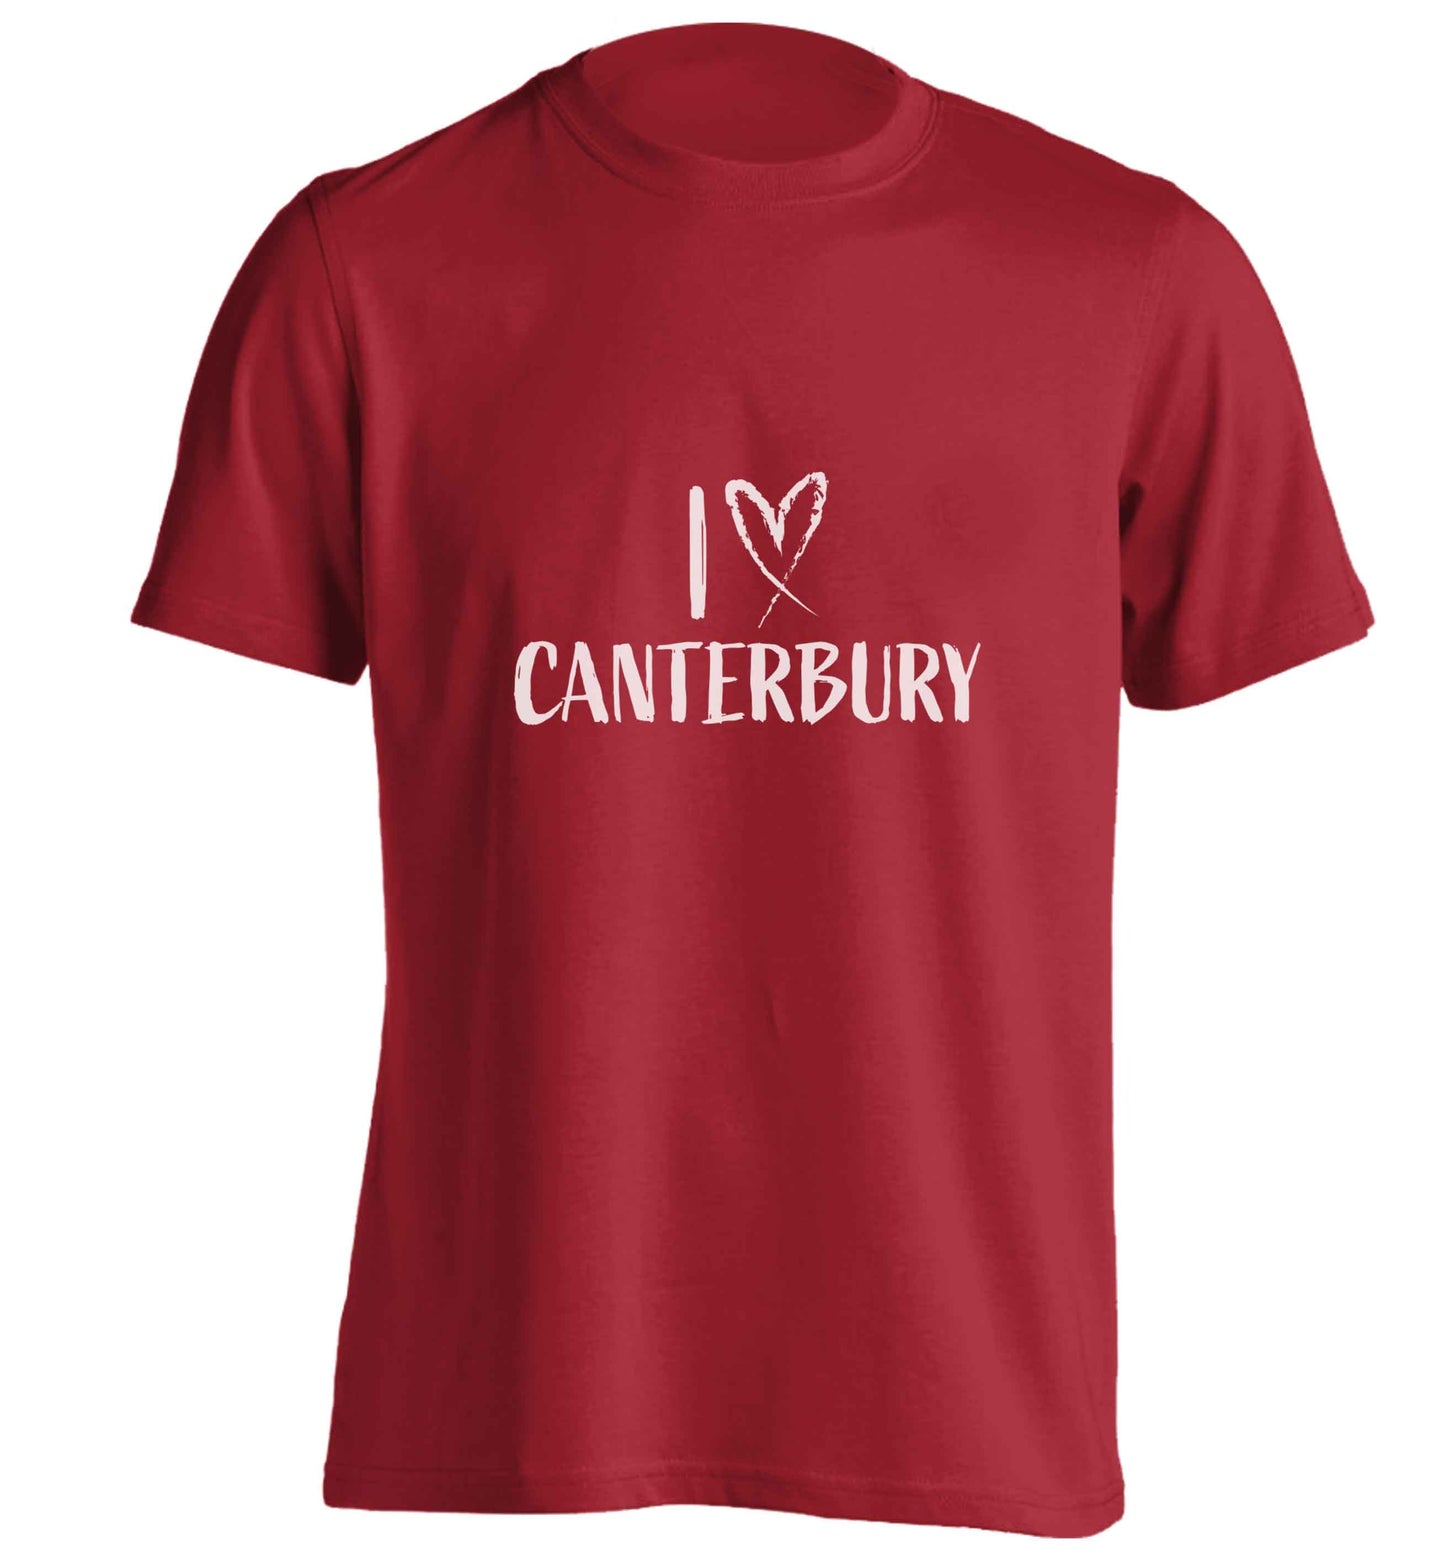 I love Canterbury adults unisex red Tshirt 2XL